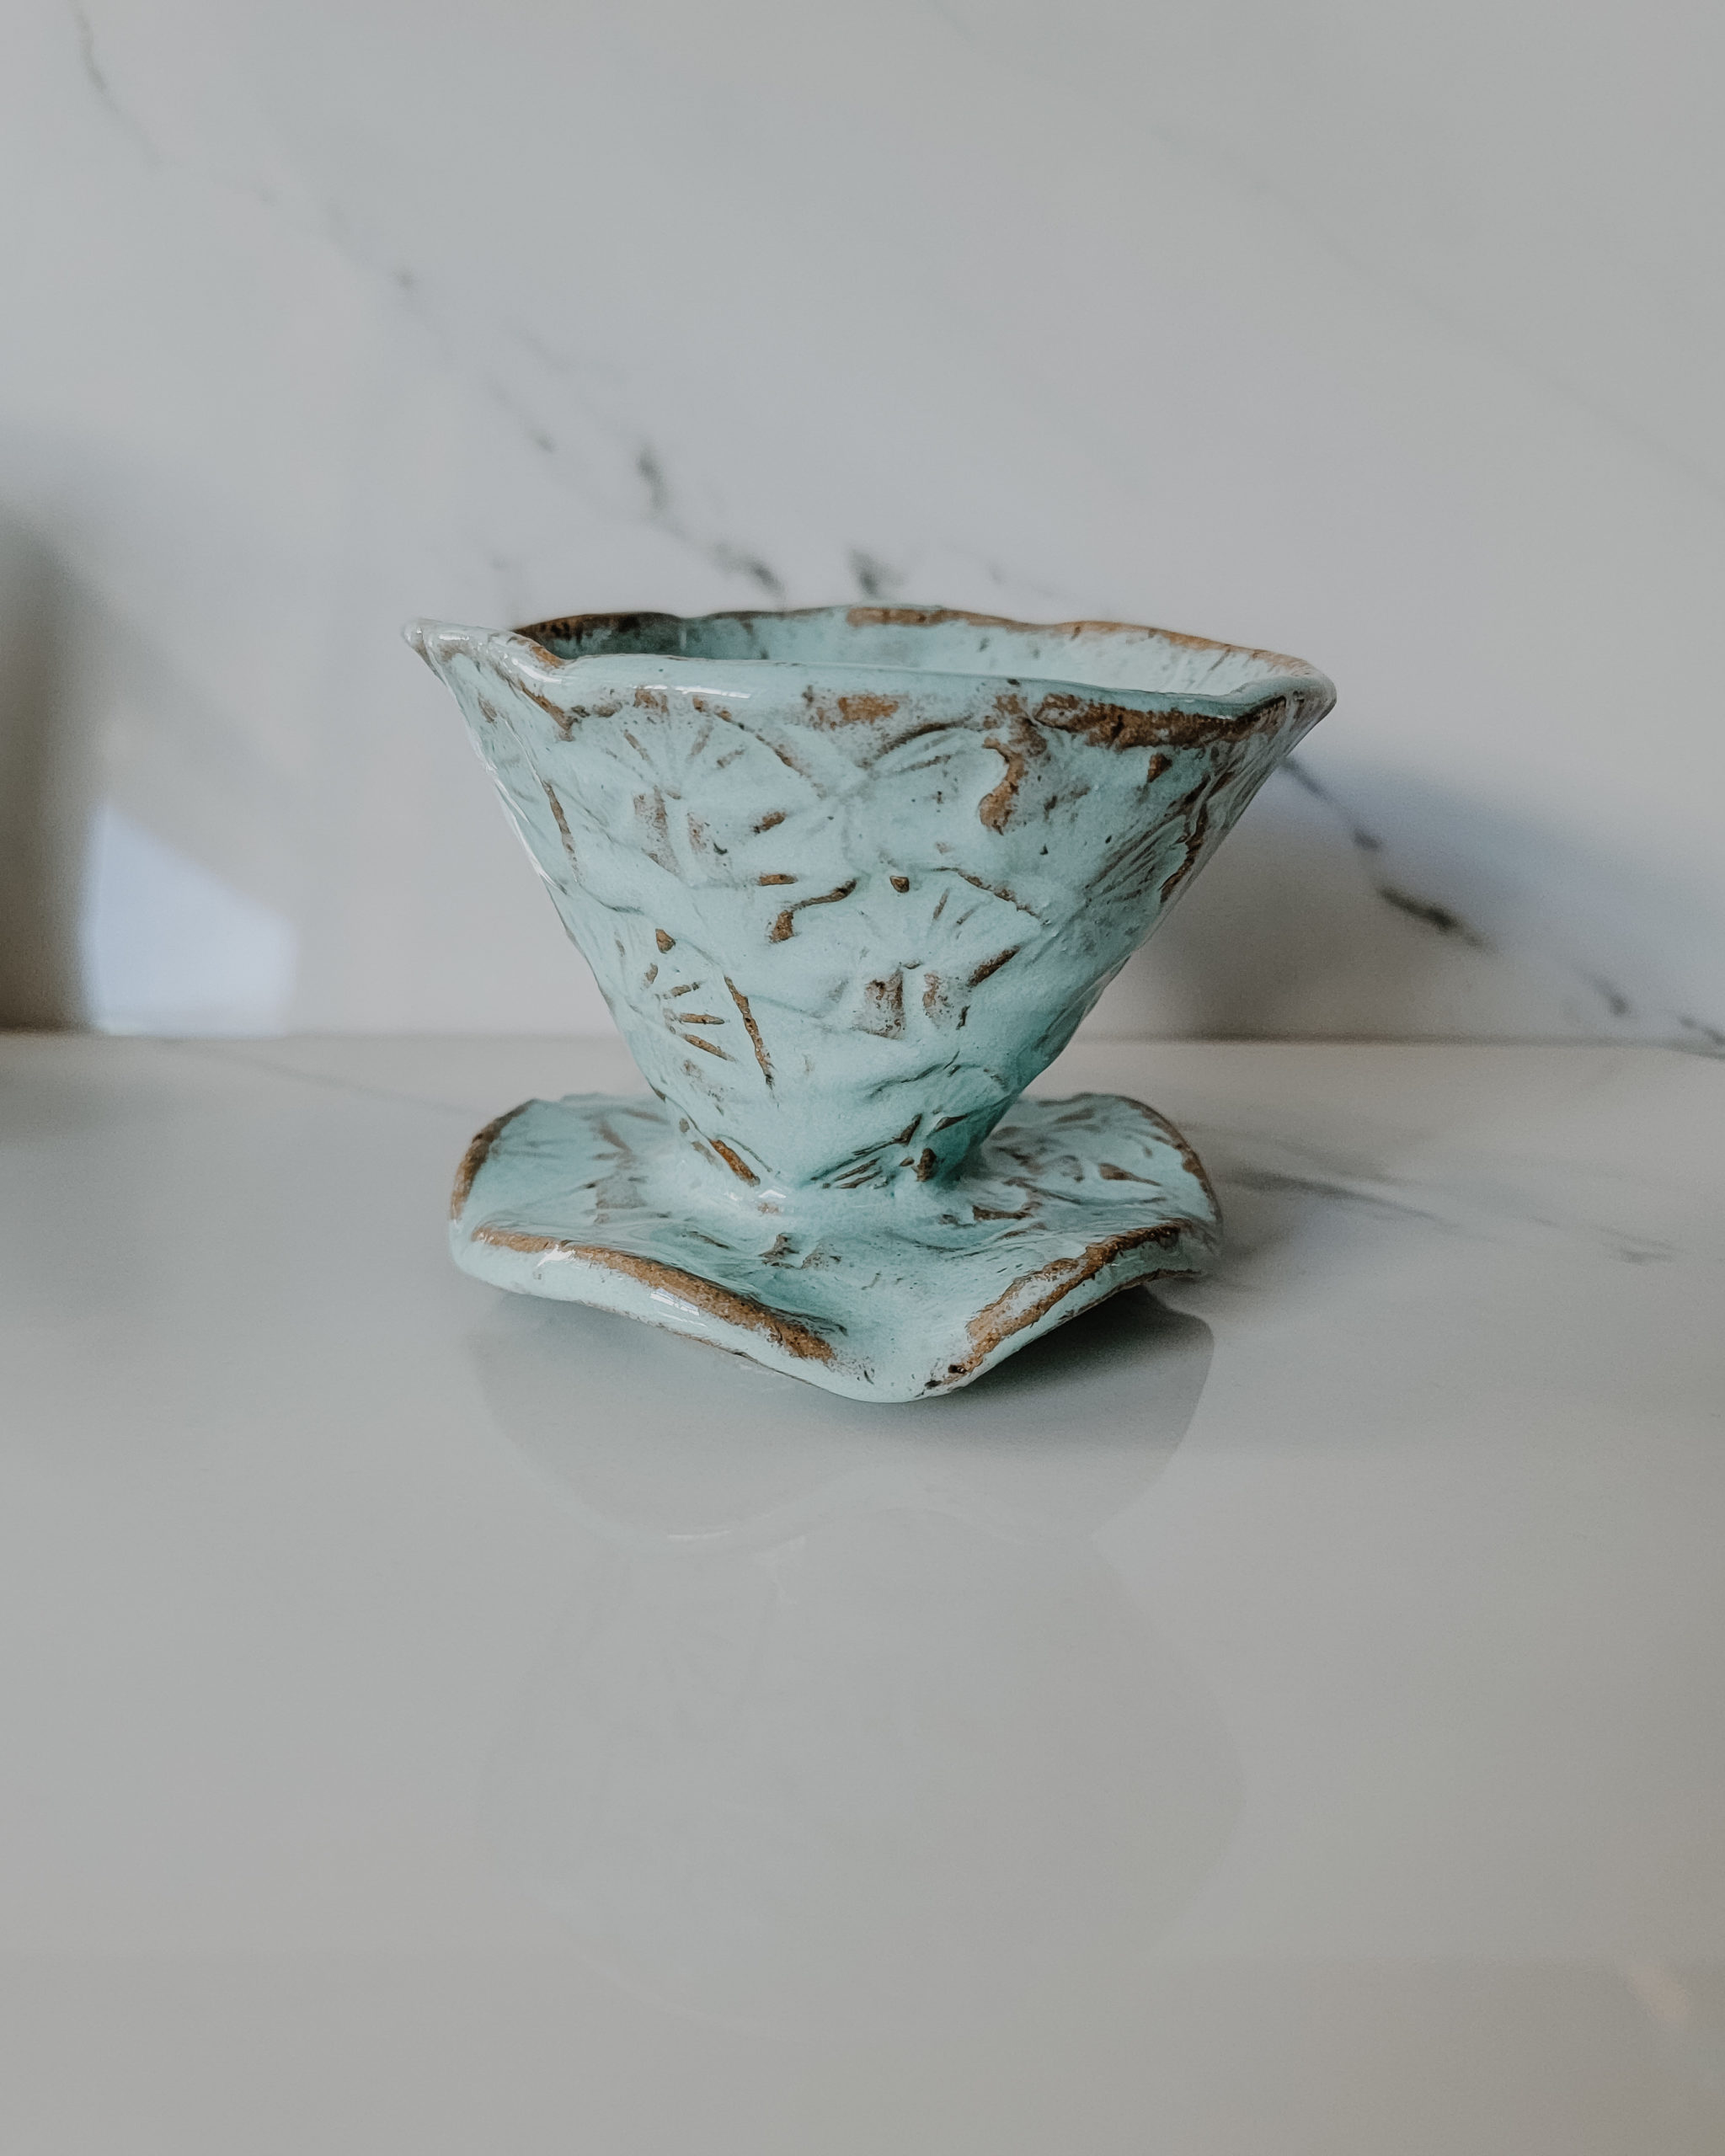 Ceramic Pour Over Coffee Set – MMEP.